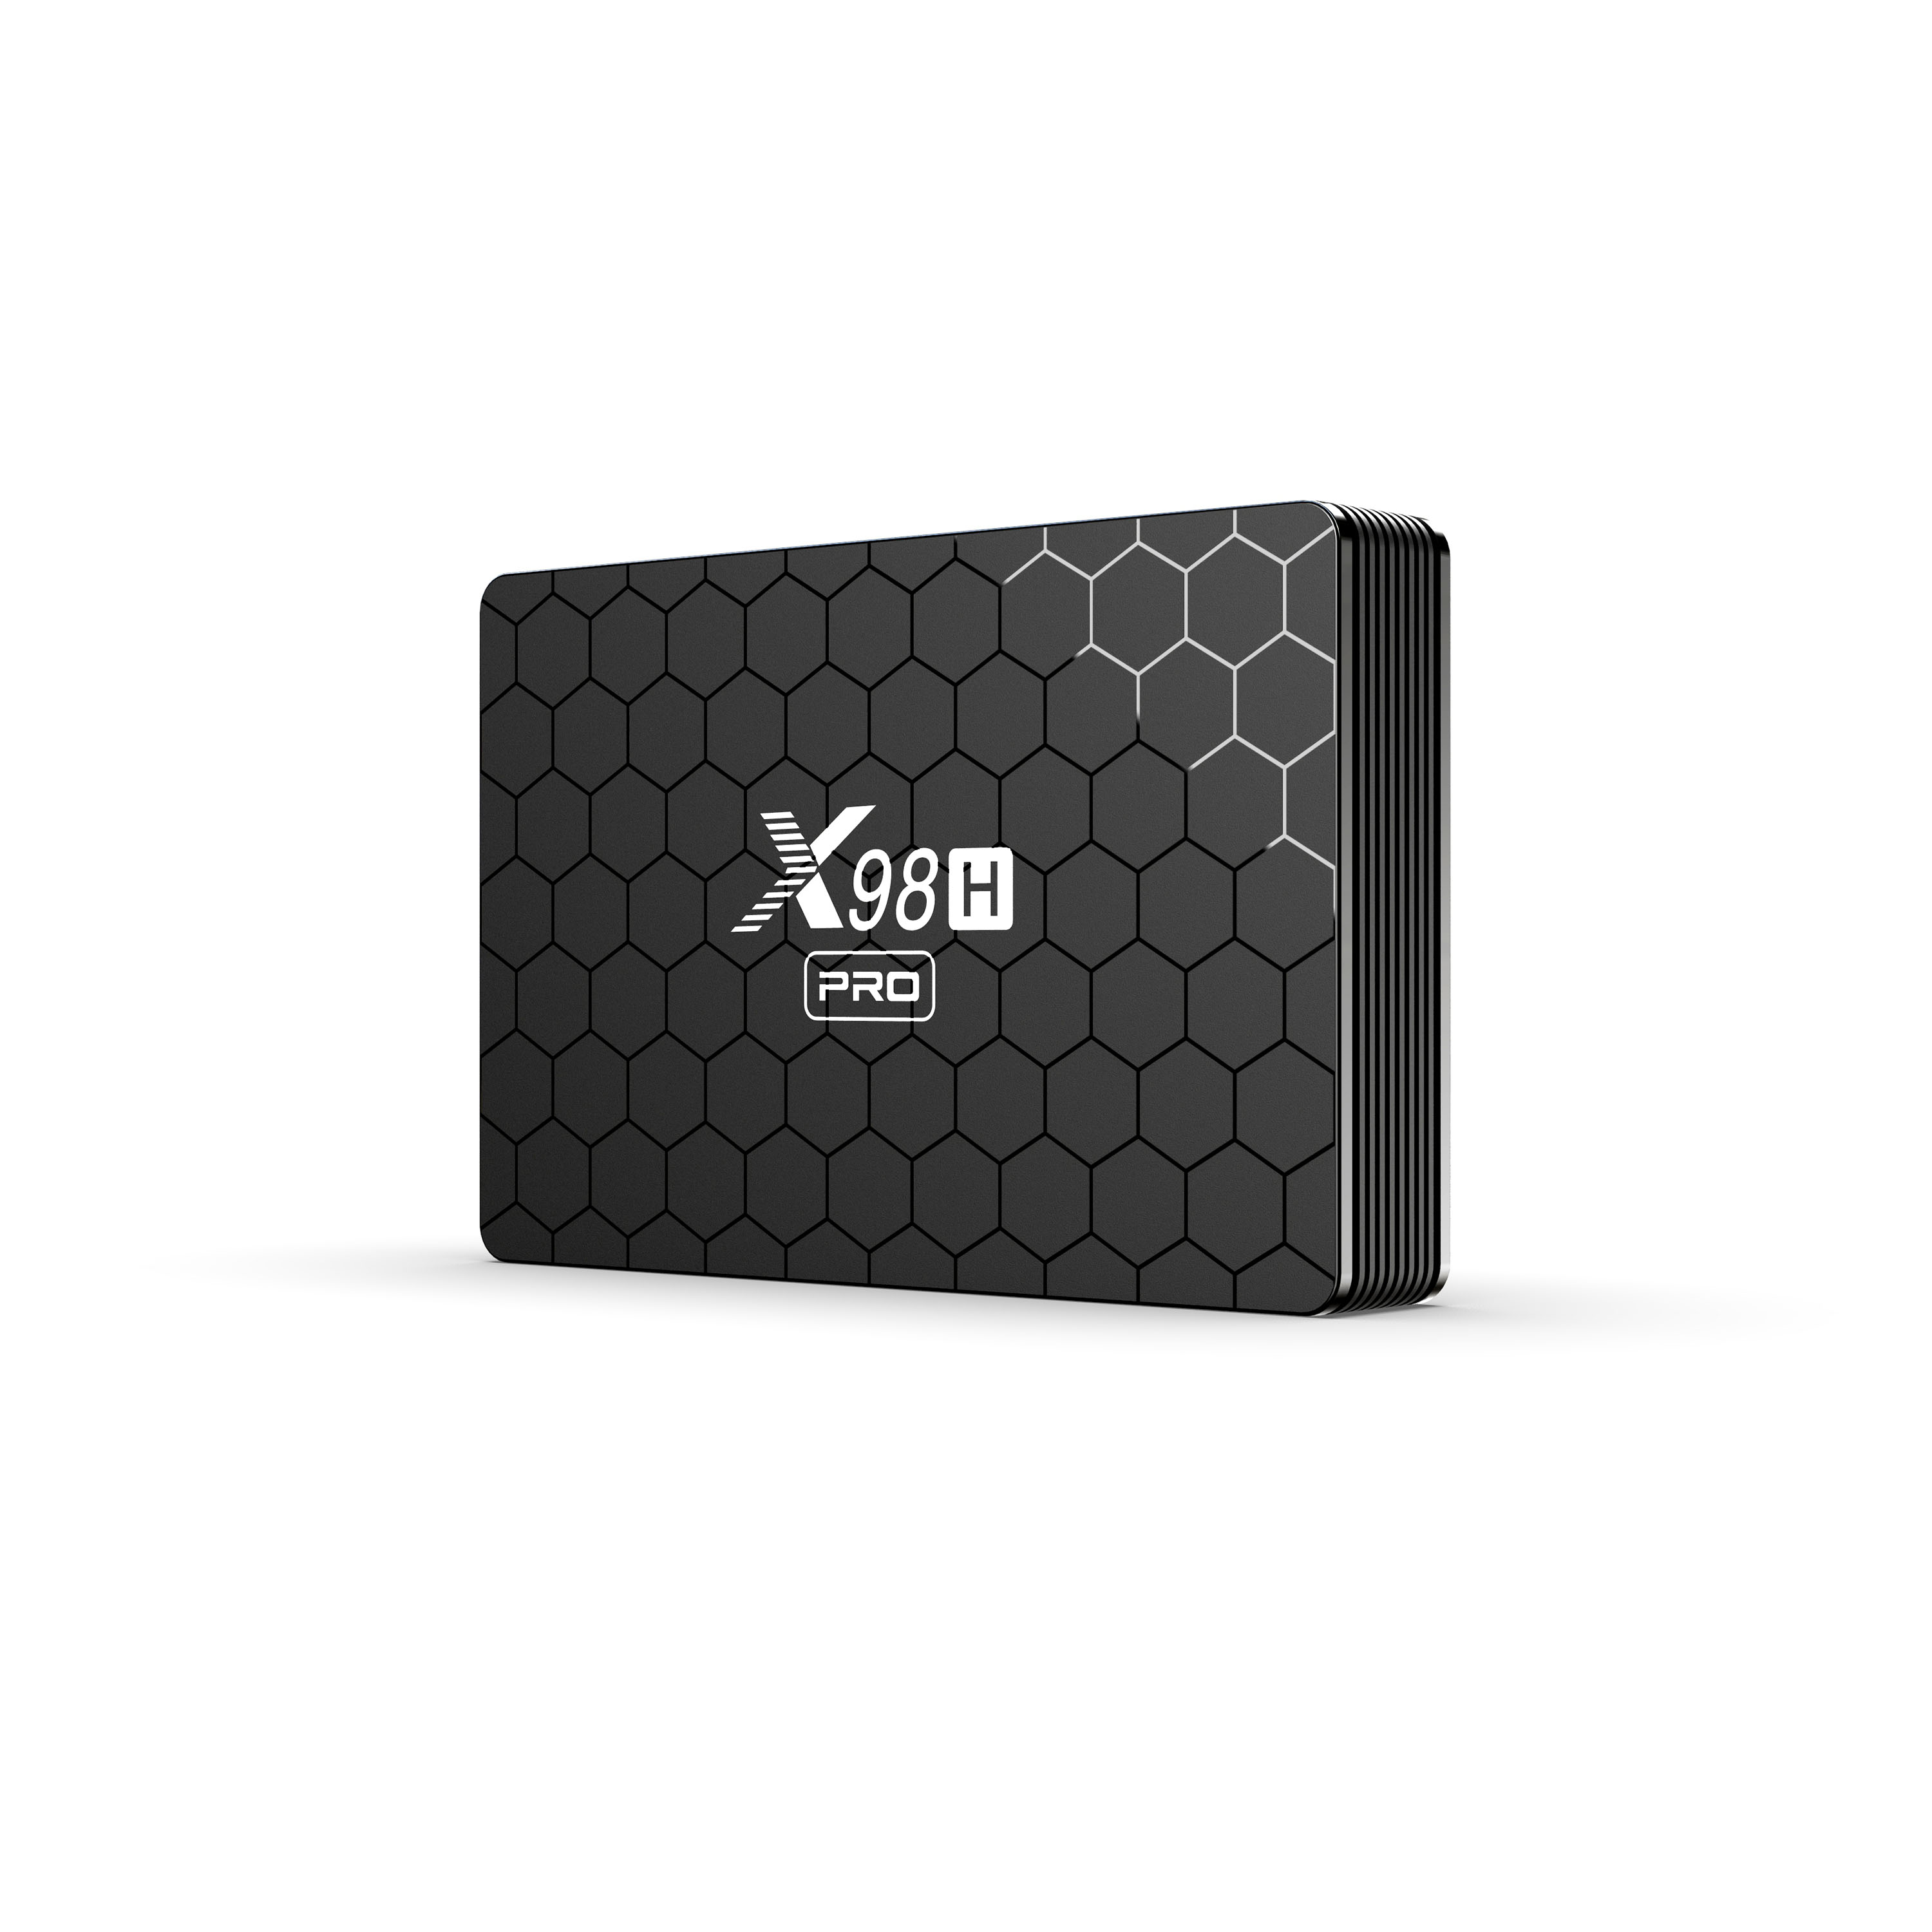 X98H Pro 机顶盒